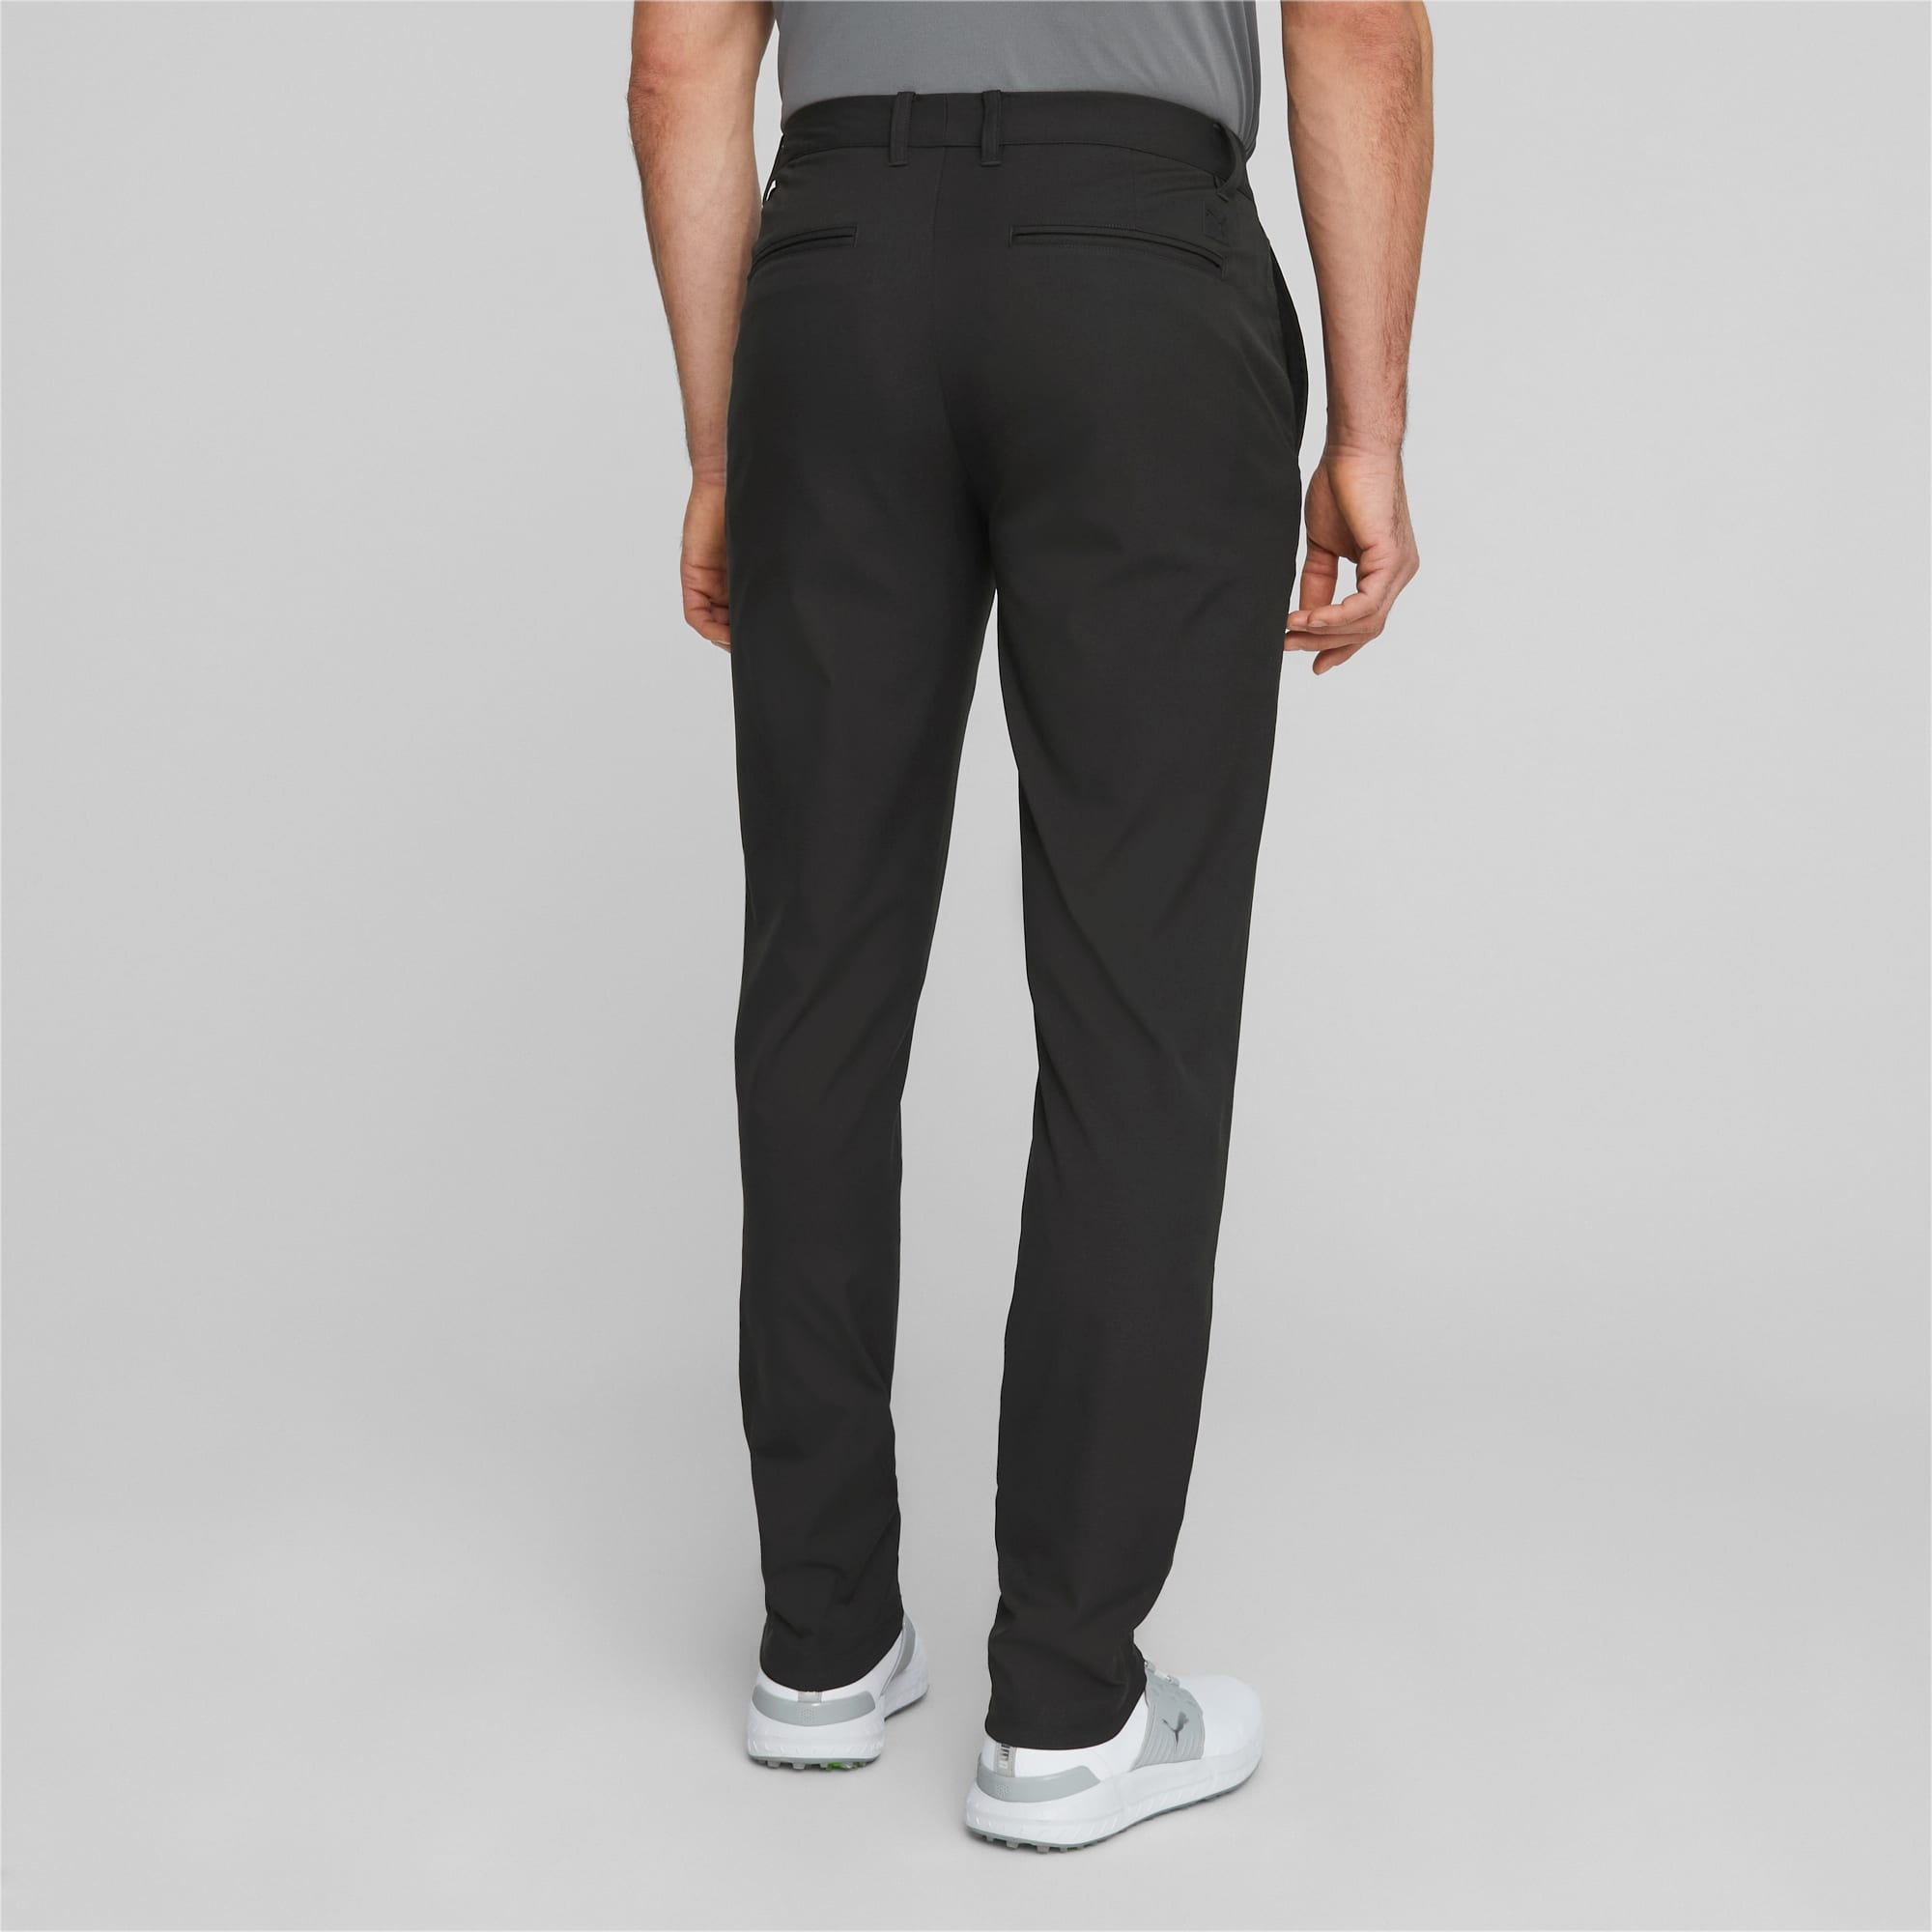 PUMA Dealer Tailored Golf Pants Men, Black